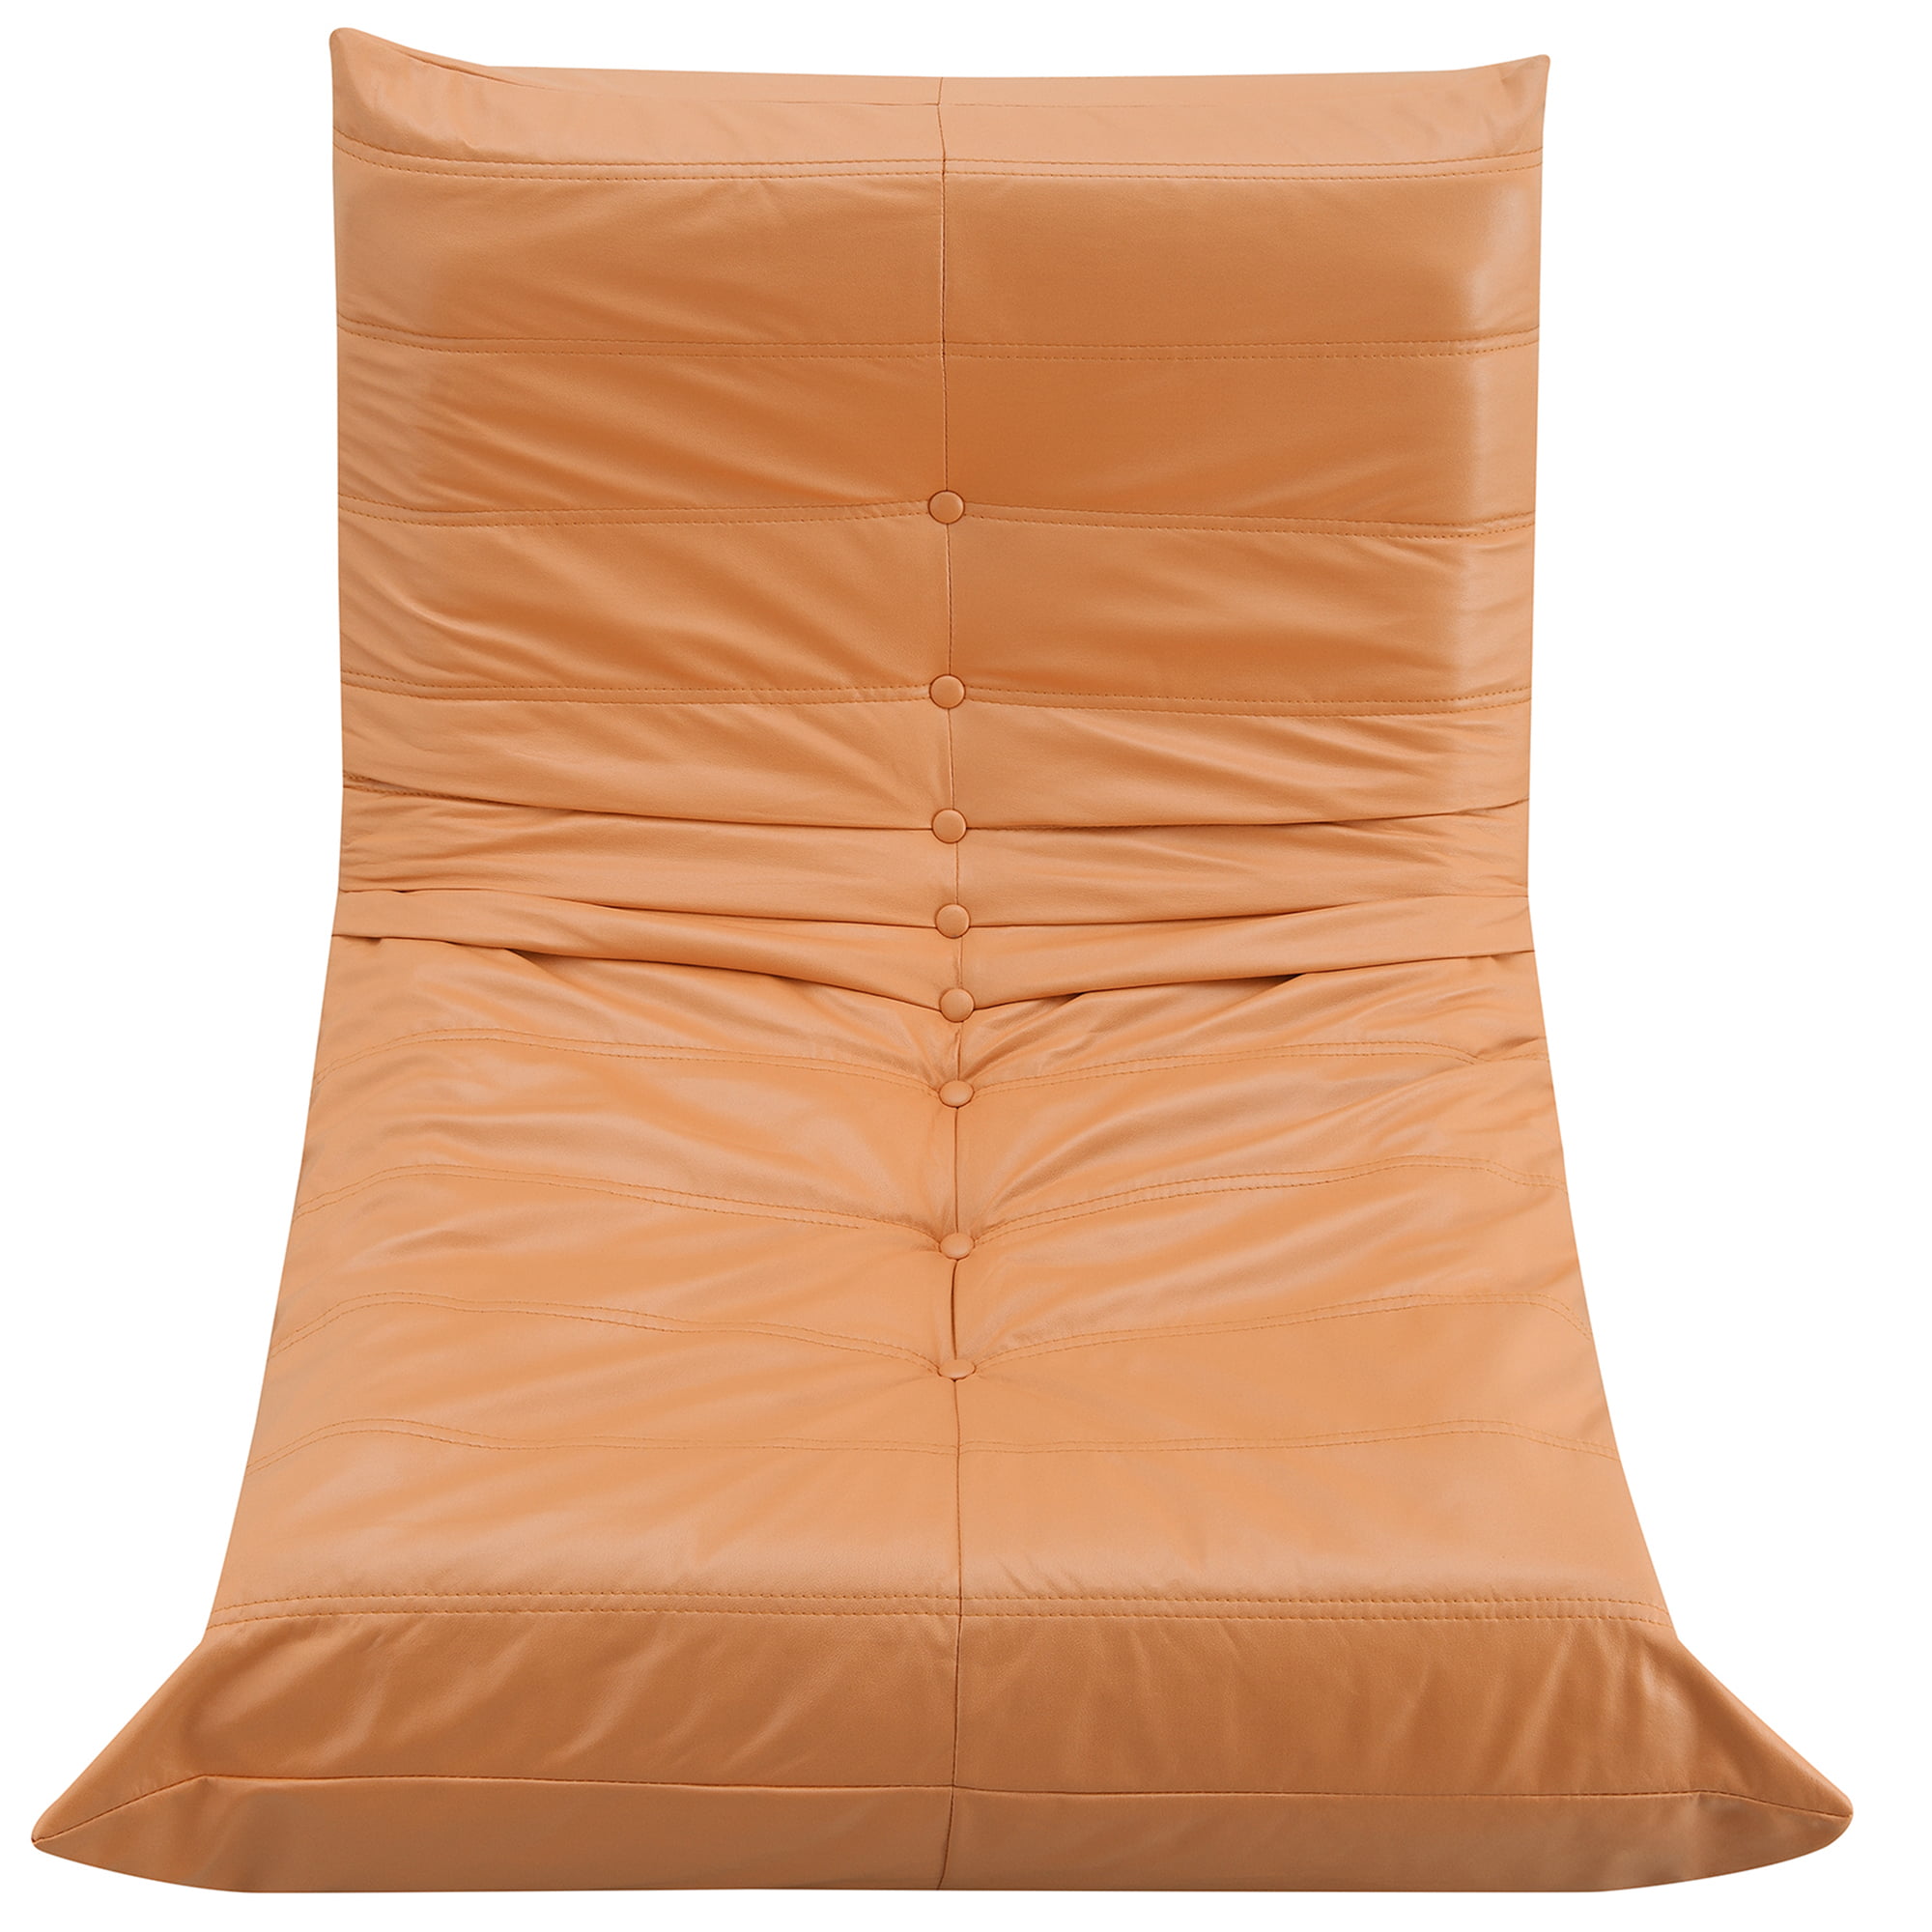 Comfy Oversized Lazy Sofa - WF304974AAG